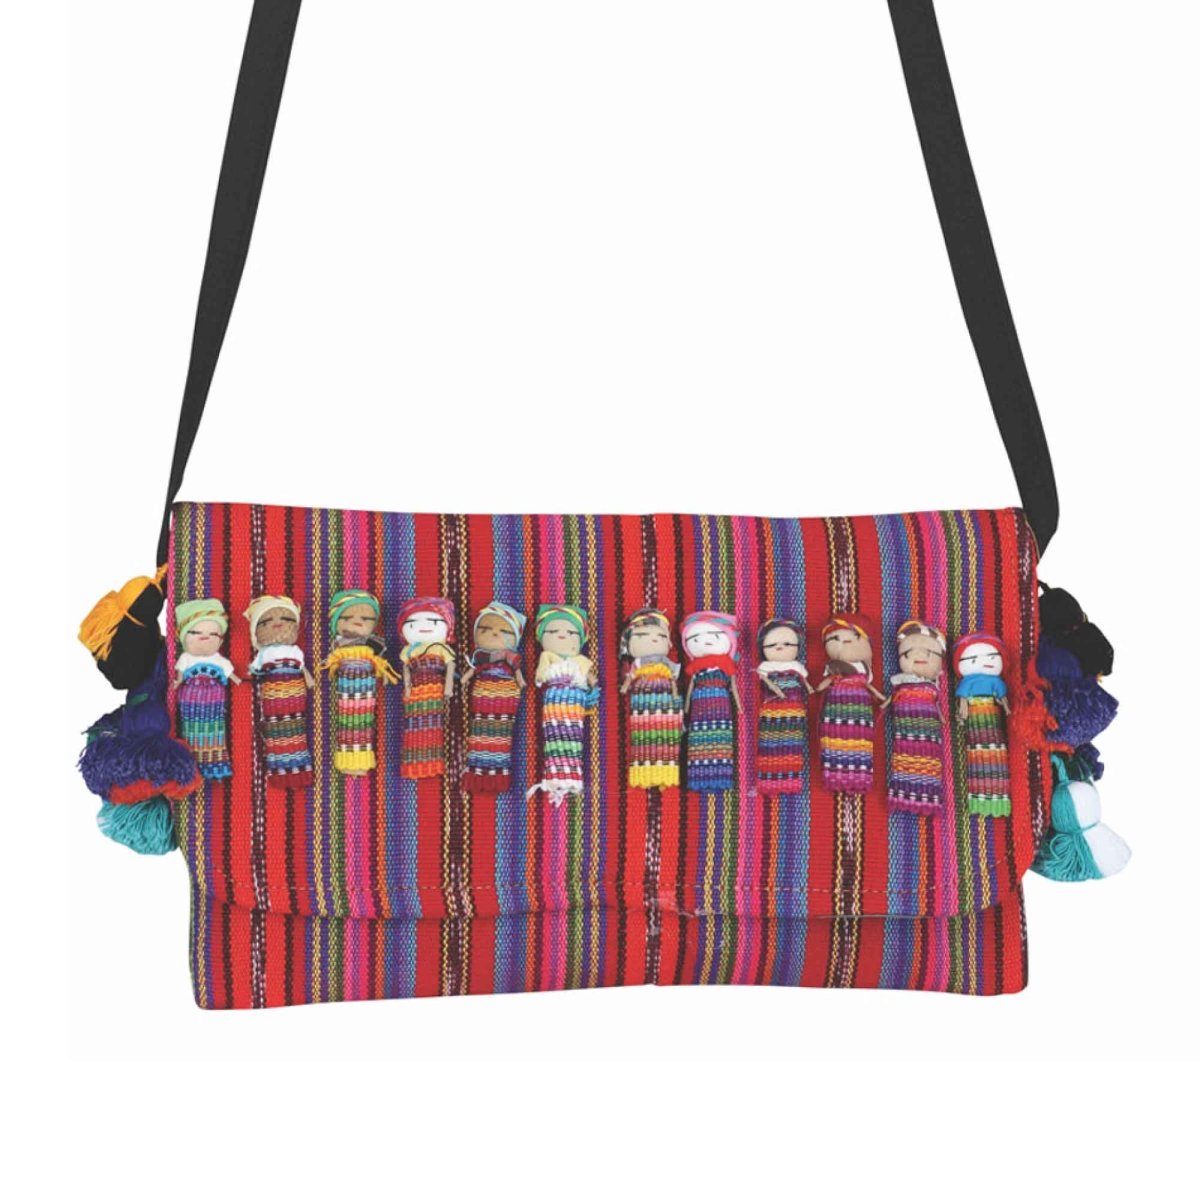 Hand made Mexican embroidered bag - CharroAzteca.com